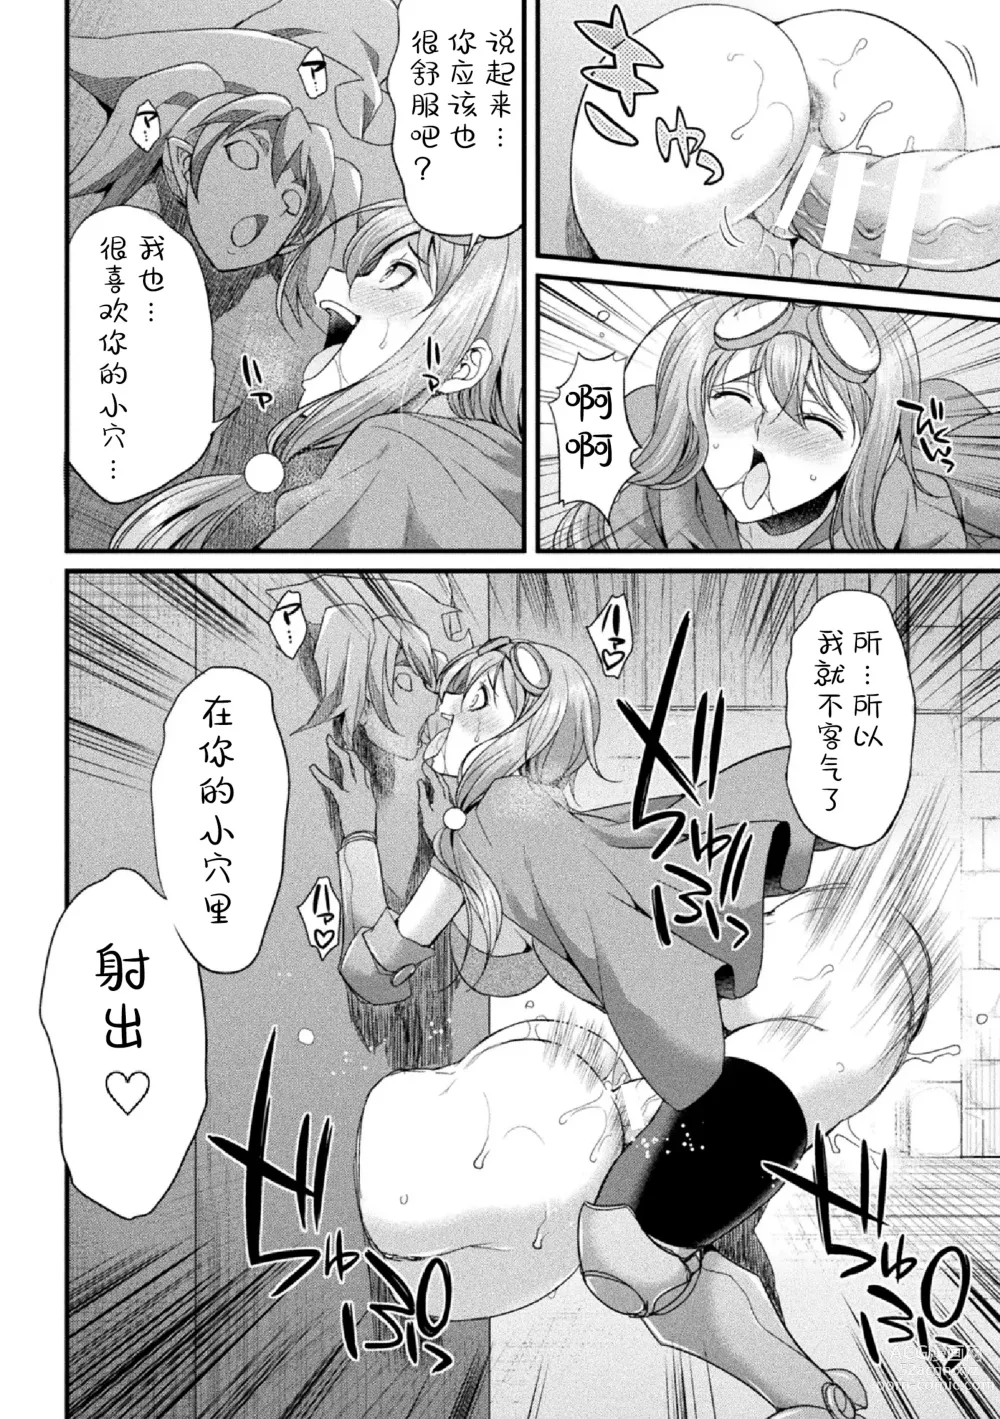 Page 12 of manga Miyu, la aventurera Futanari - La Misteriosa Mazmorra y la Trampa del Muro de Culos -